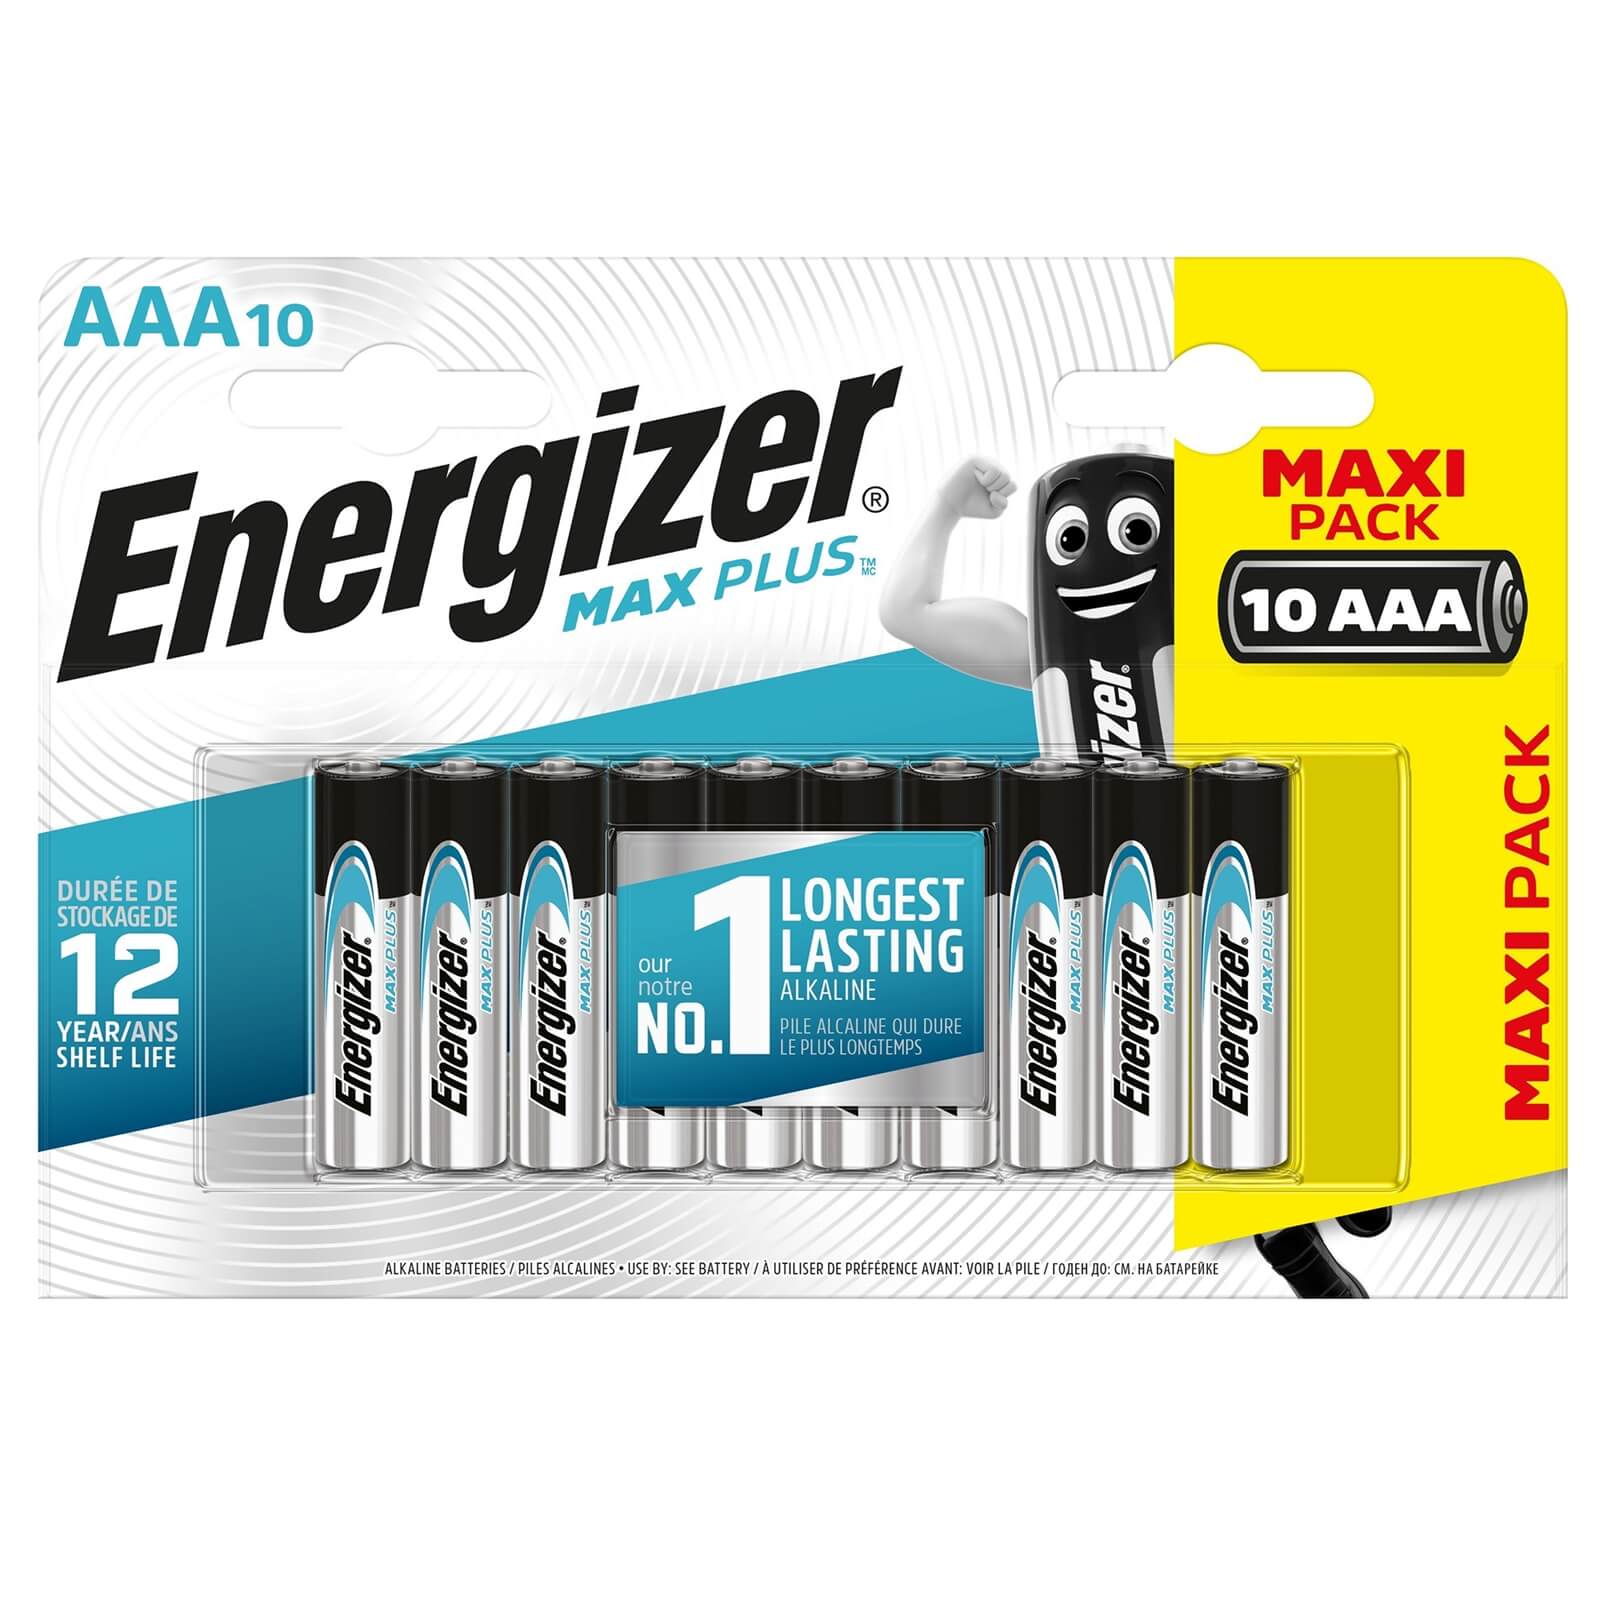 Energizer MAX PLUS Alkaline AAA Batteries - 10 Pack